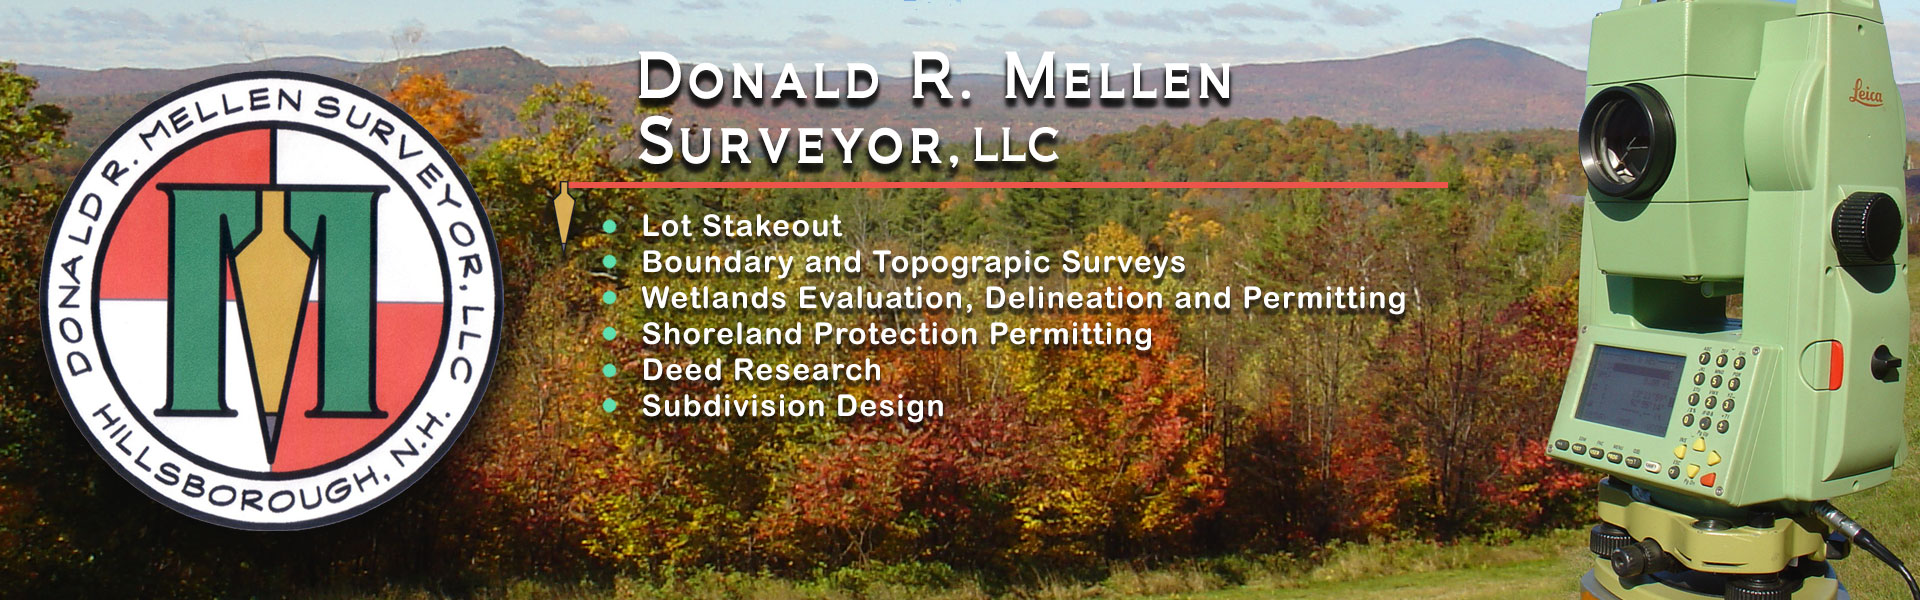 Donald R. Mellen Surveyor, LLC of Hillsborough, New Hampshire.